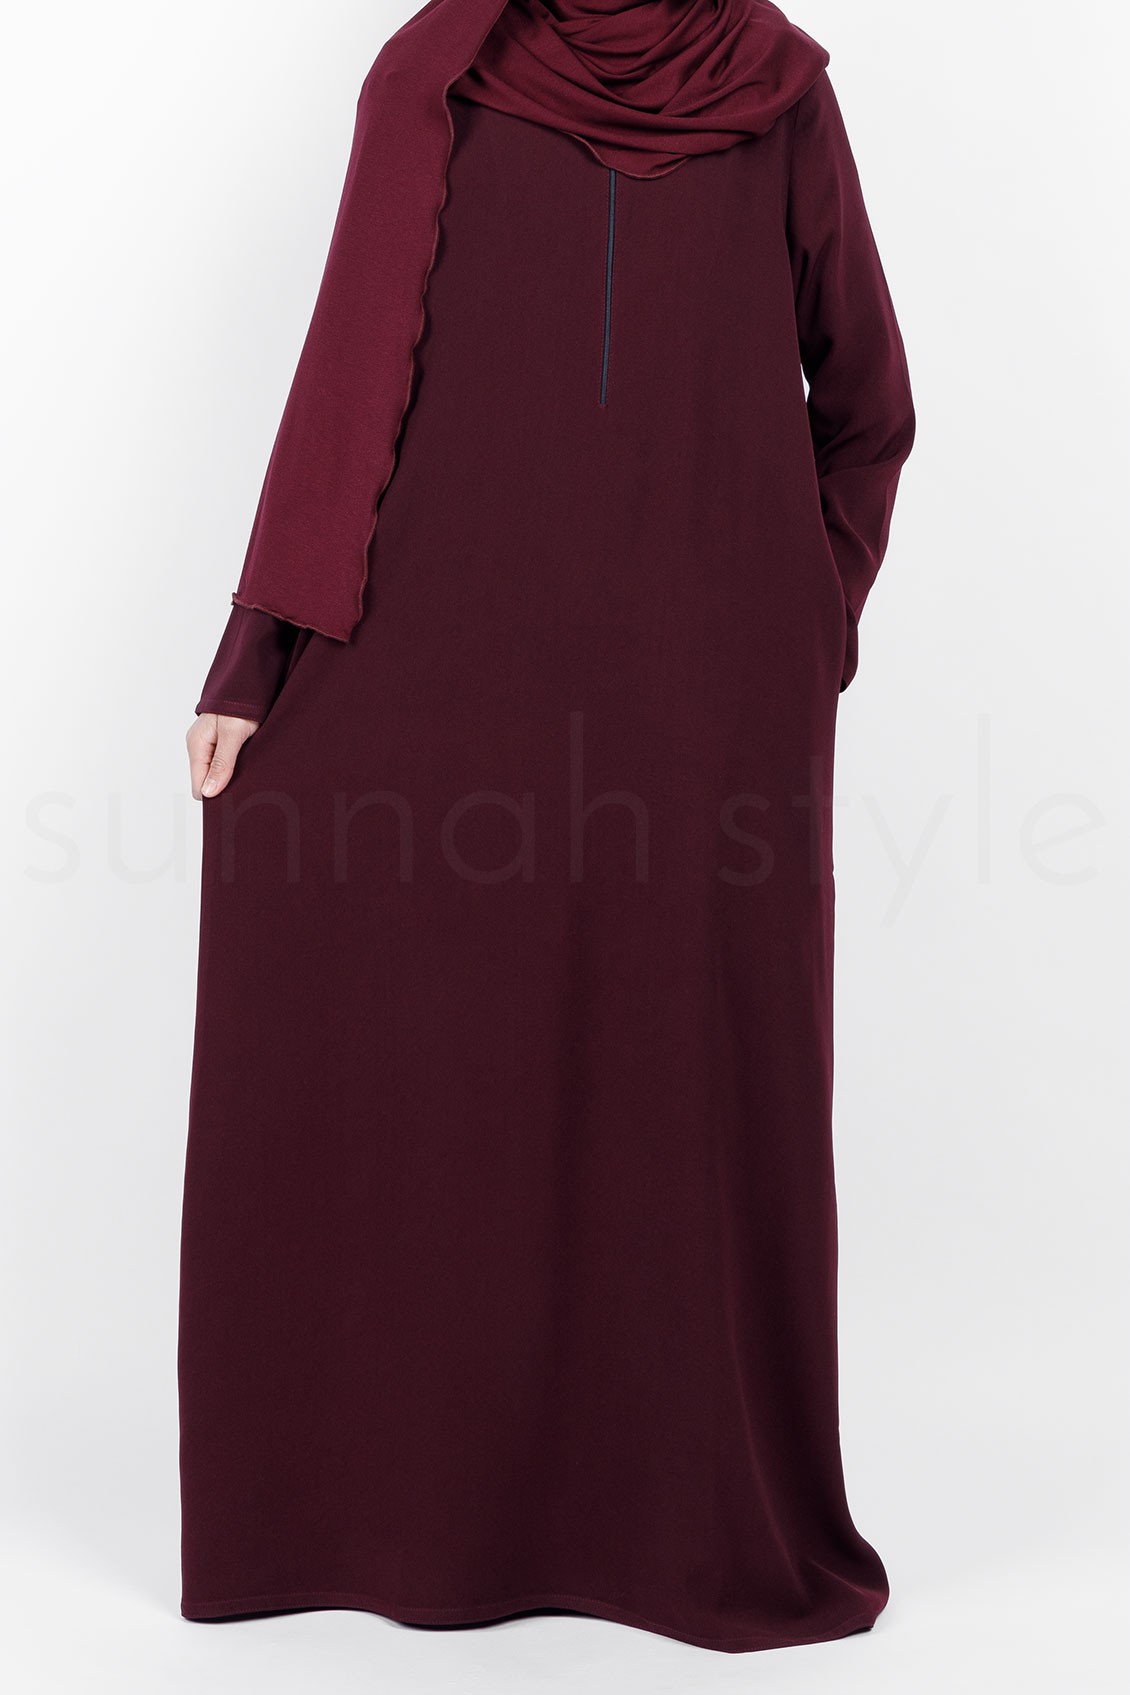 Sunnah Style Essentials Closed Abaya Slim Garnet